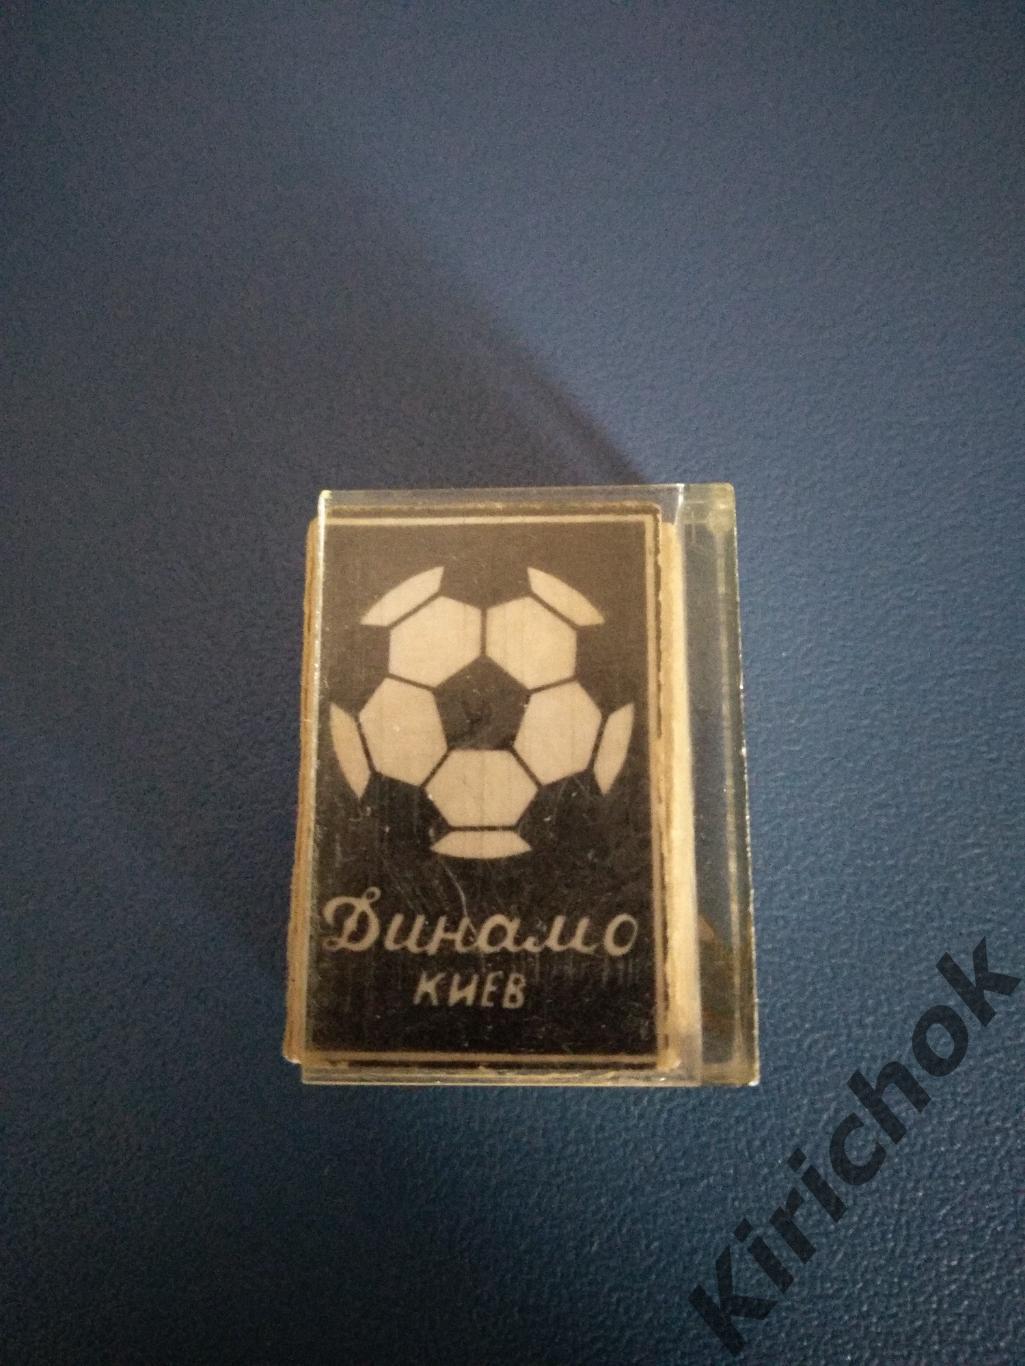 Буклет: Динамо Киев 1981. Мини - формат, фото - буклет в виде книги